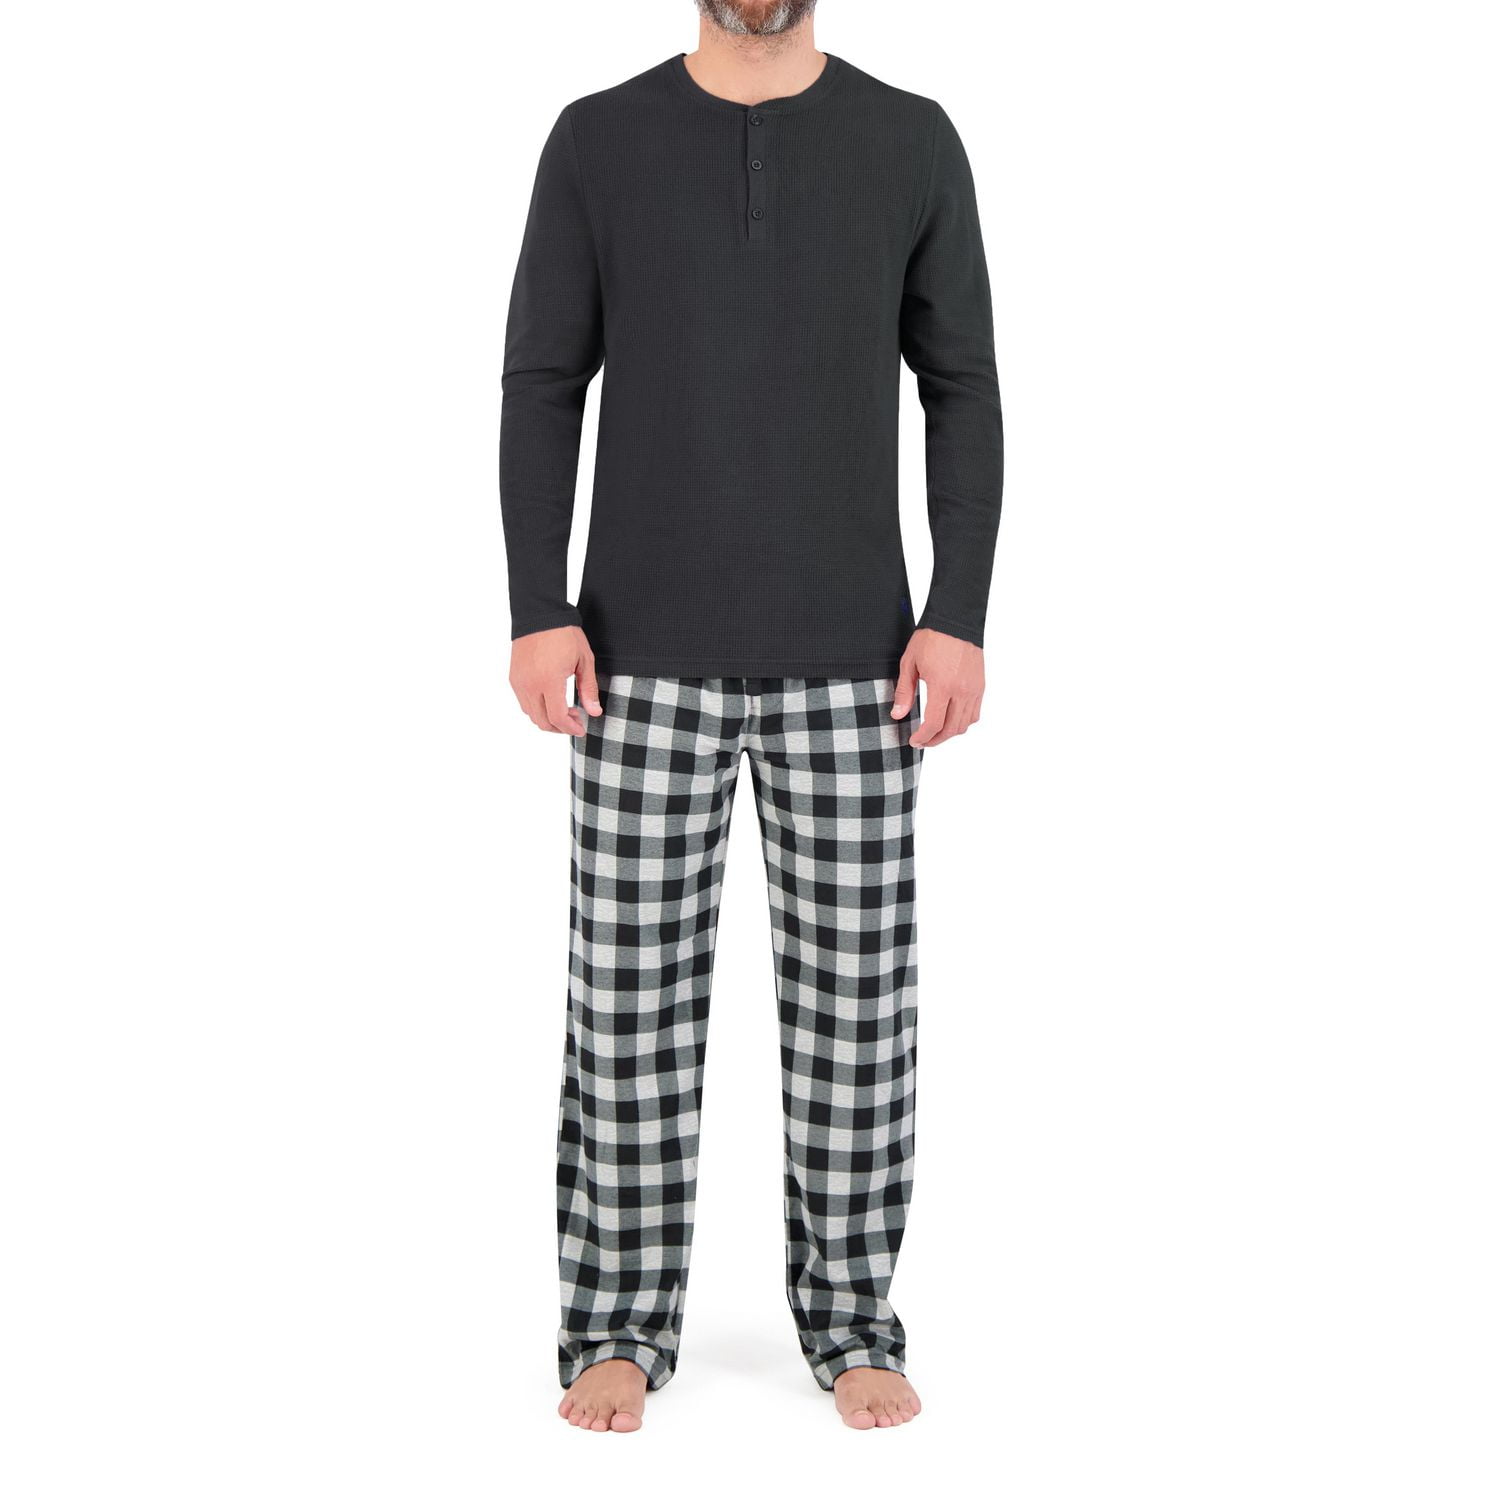 U.S. POLO ASSN. Men's Sleepwear Set Long Sleeve Waffle Henley Lounge Top  and Soft Sleep Pajama Pant